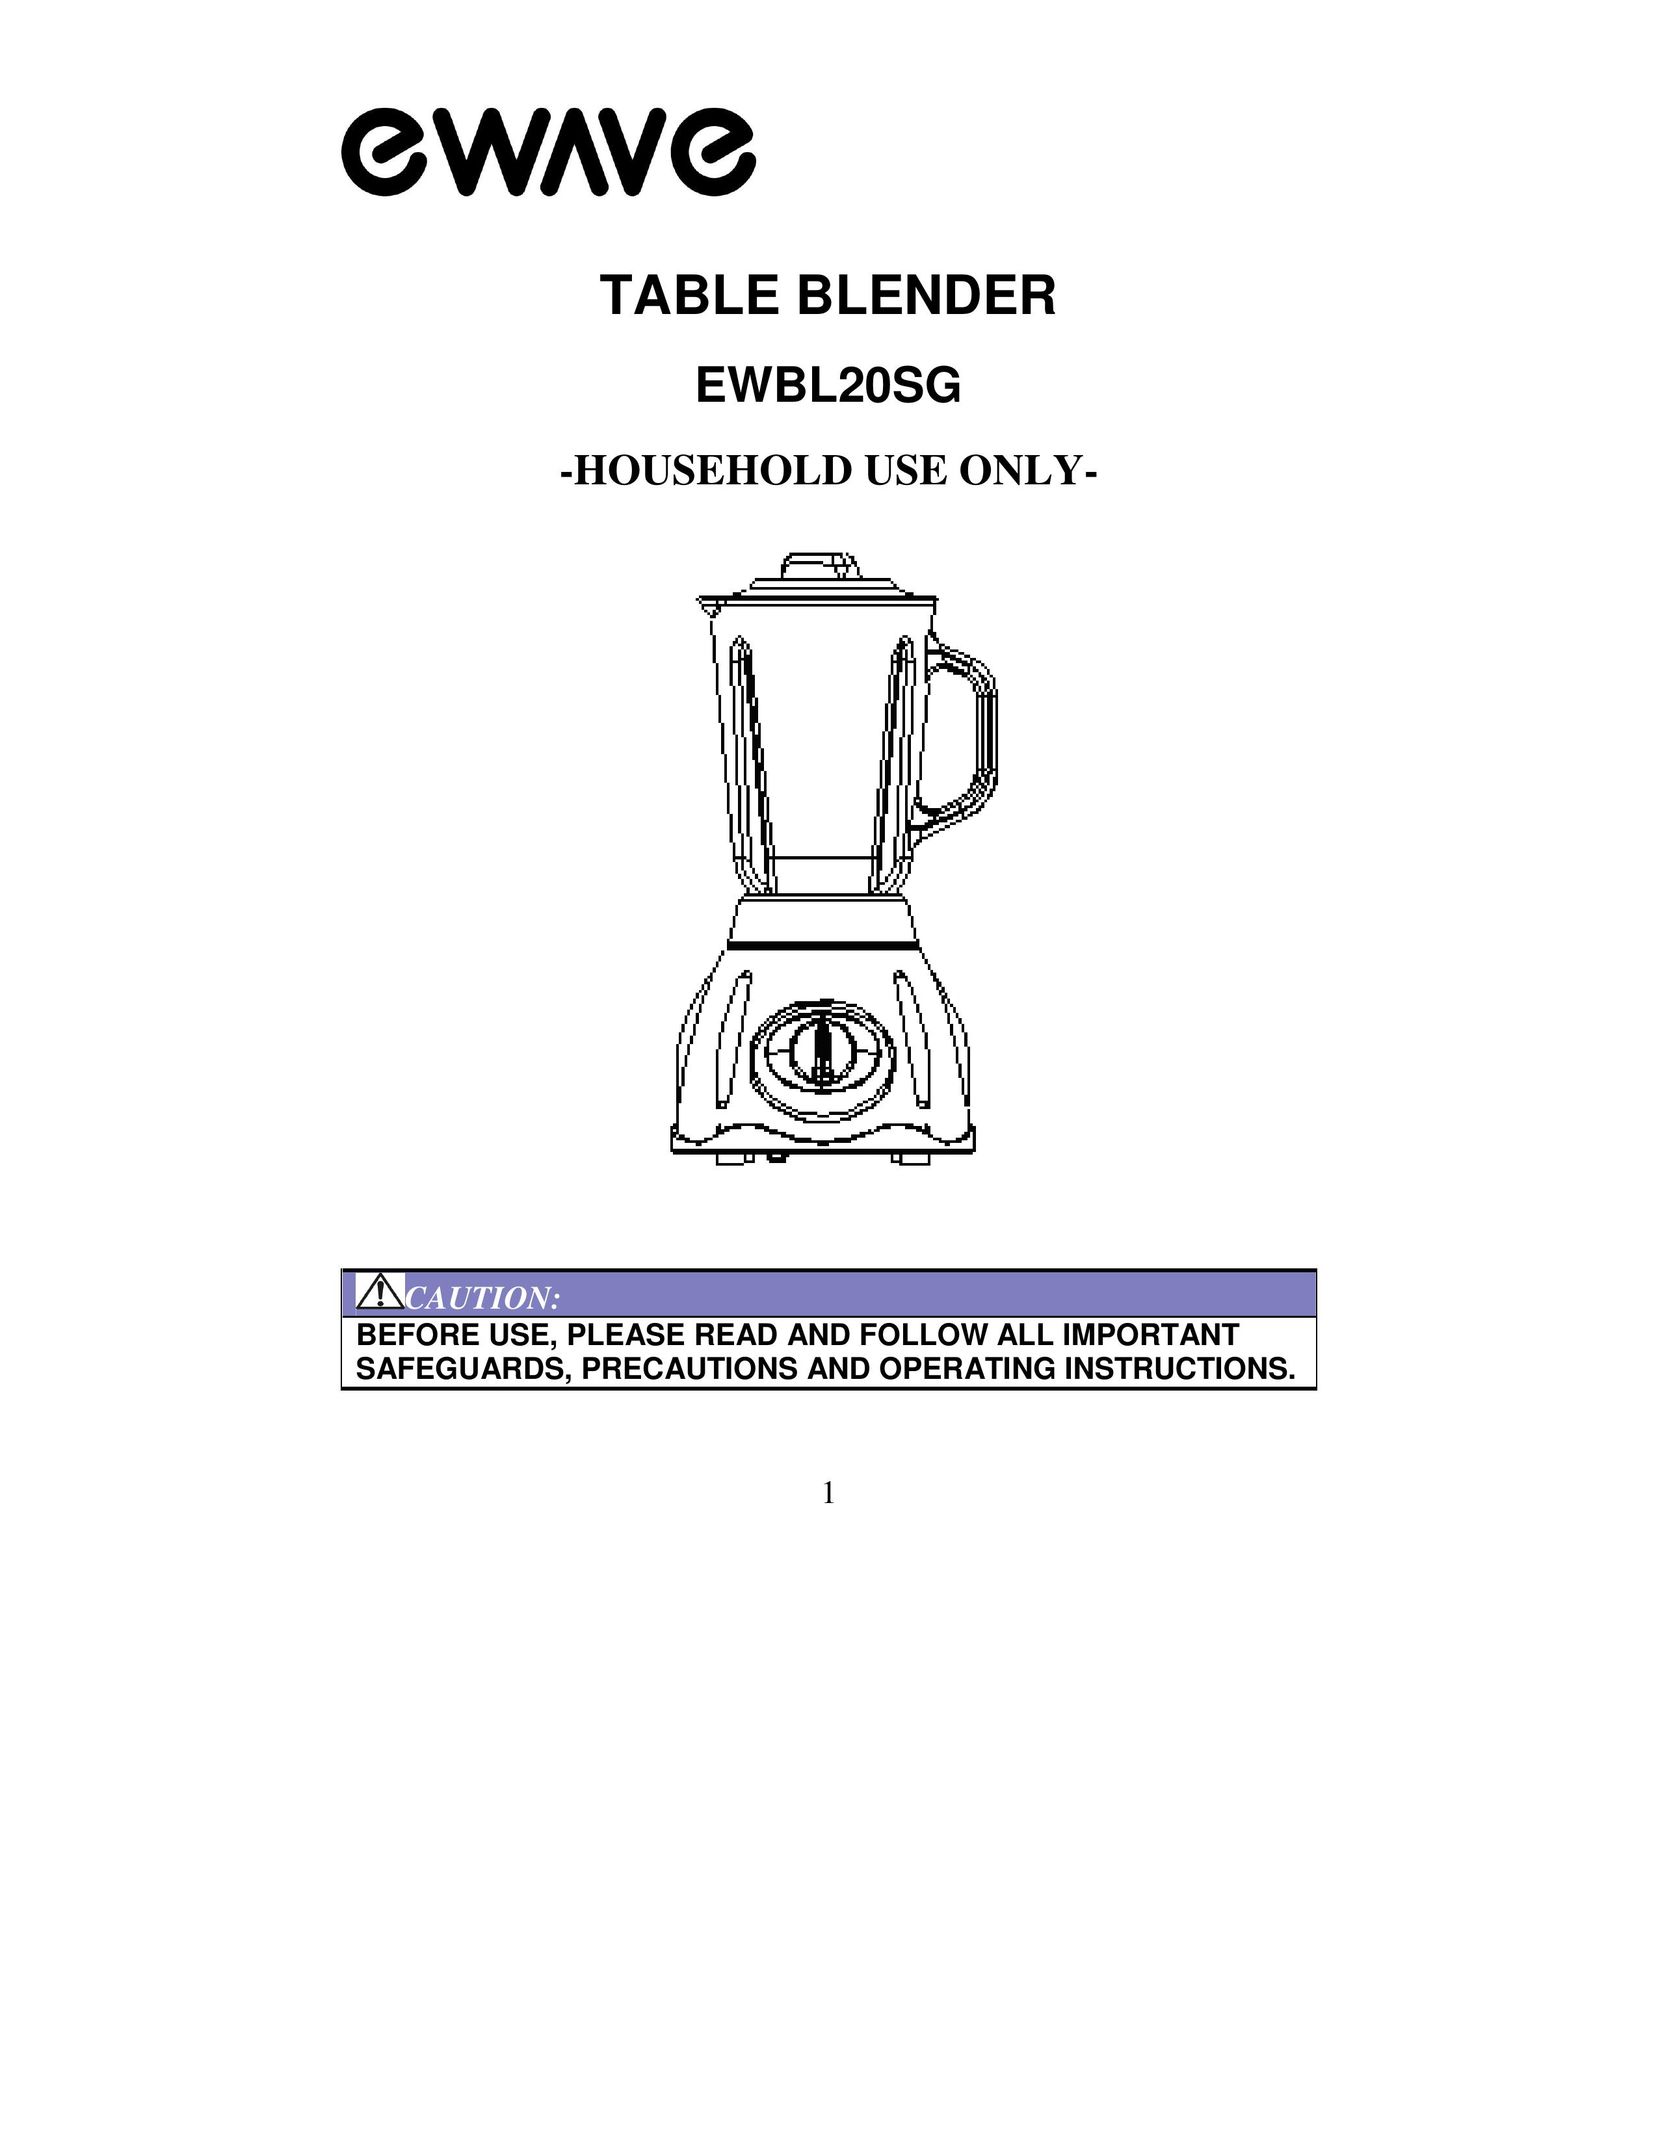 Magic Chef EWBL20SG Blender User Manual